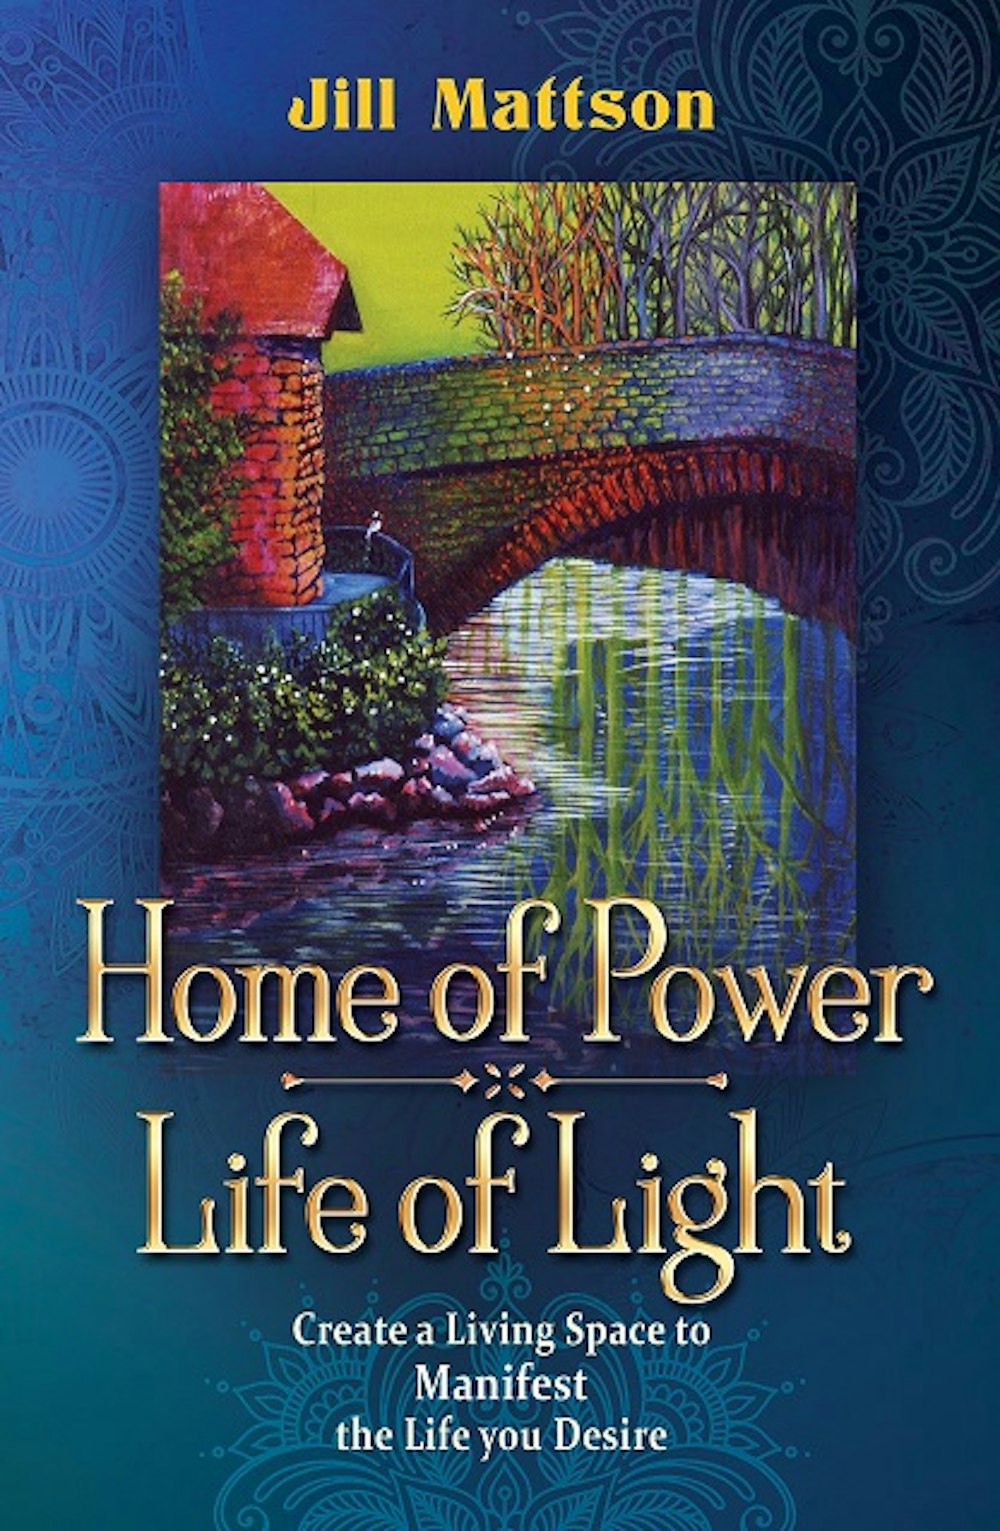 Jill Mattson talks about her newest book; Home of Power - Life of Light